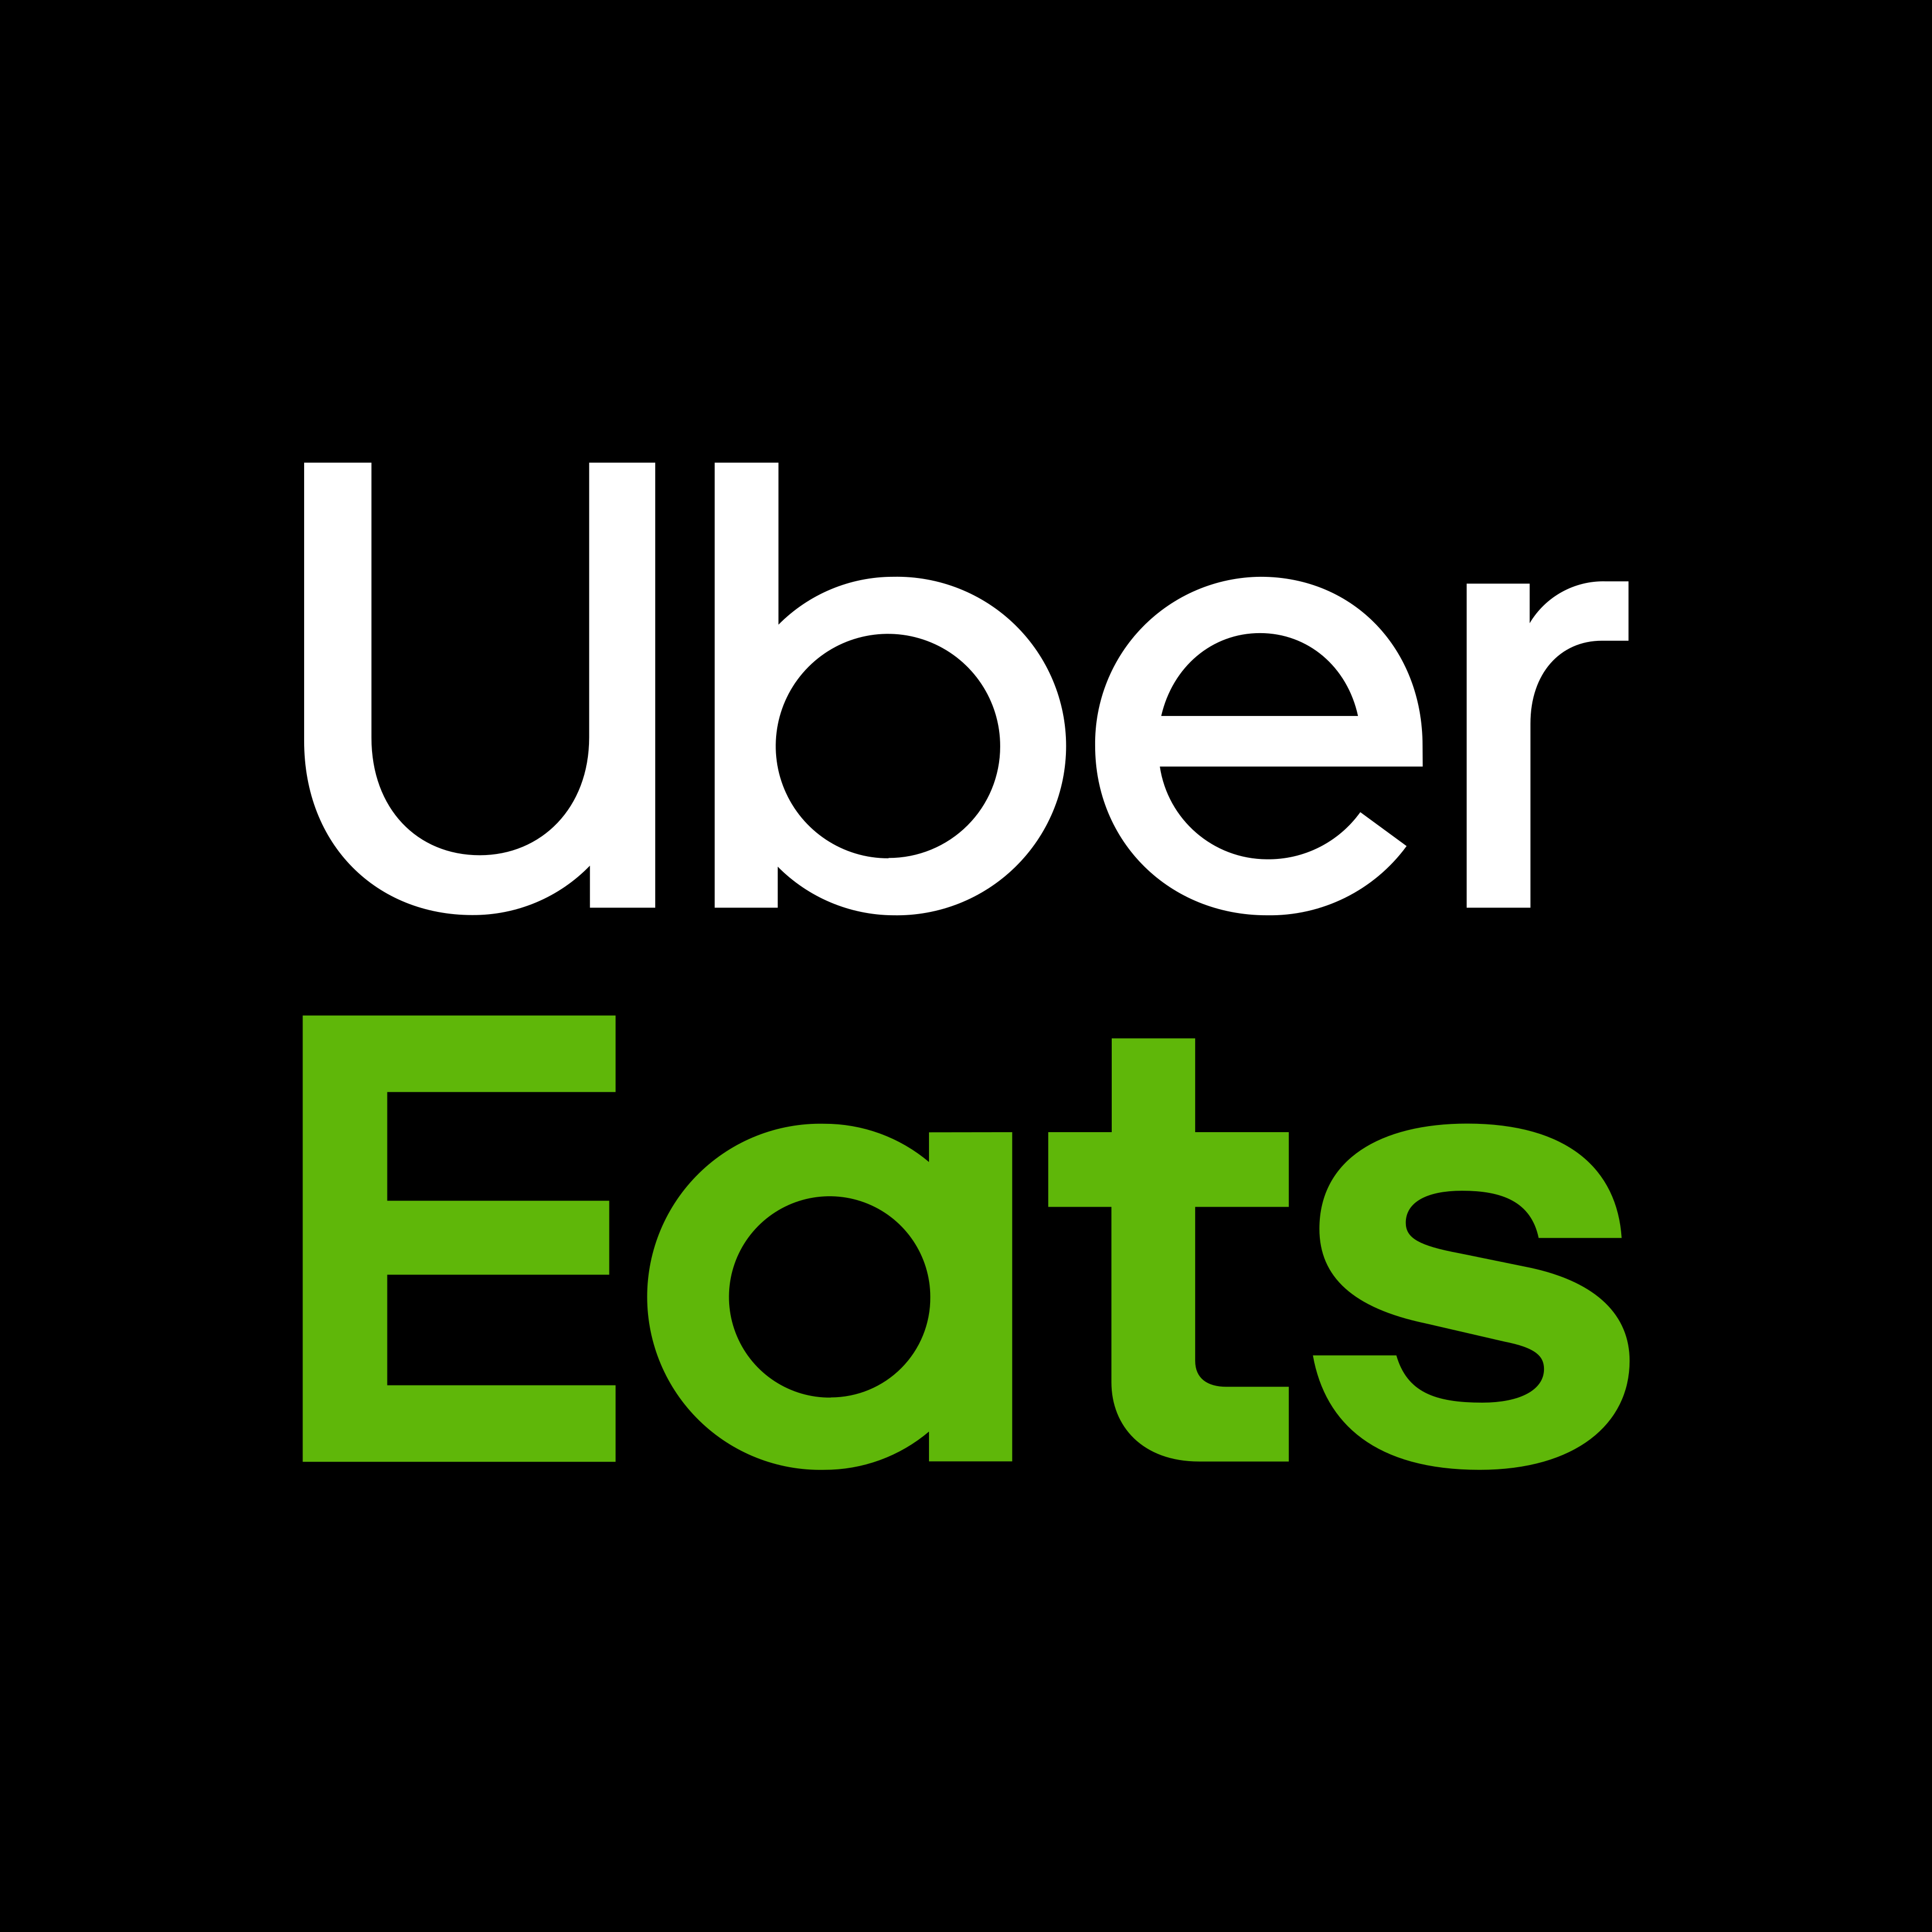 PROMO Uber Eats Roma - Da Rossopomodoro prendi 1 e ricevi 1 gratis!